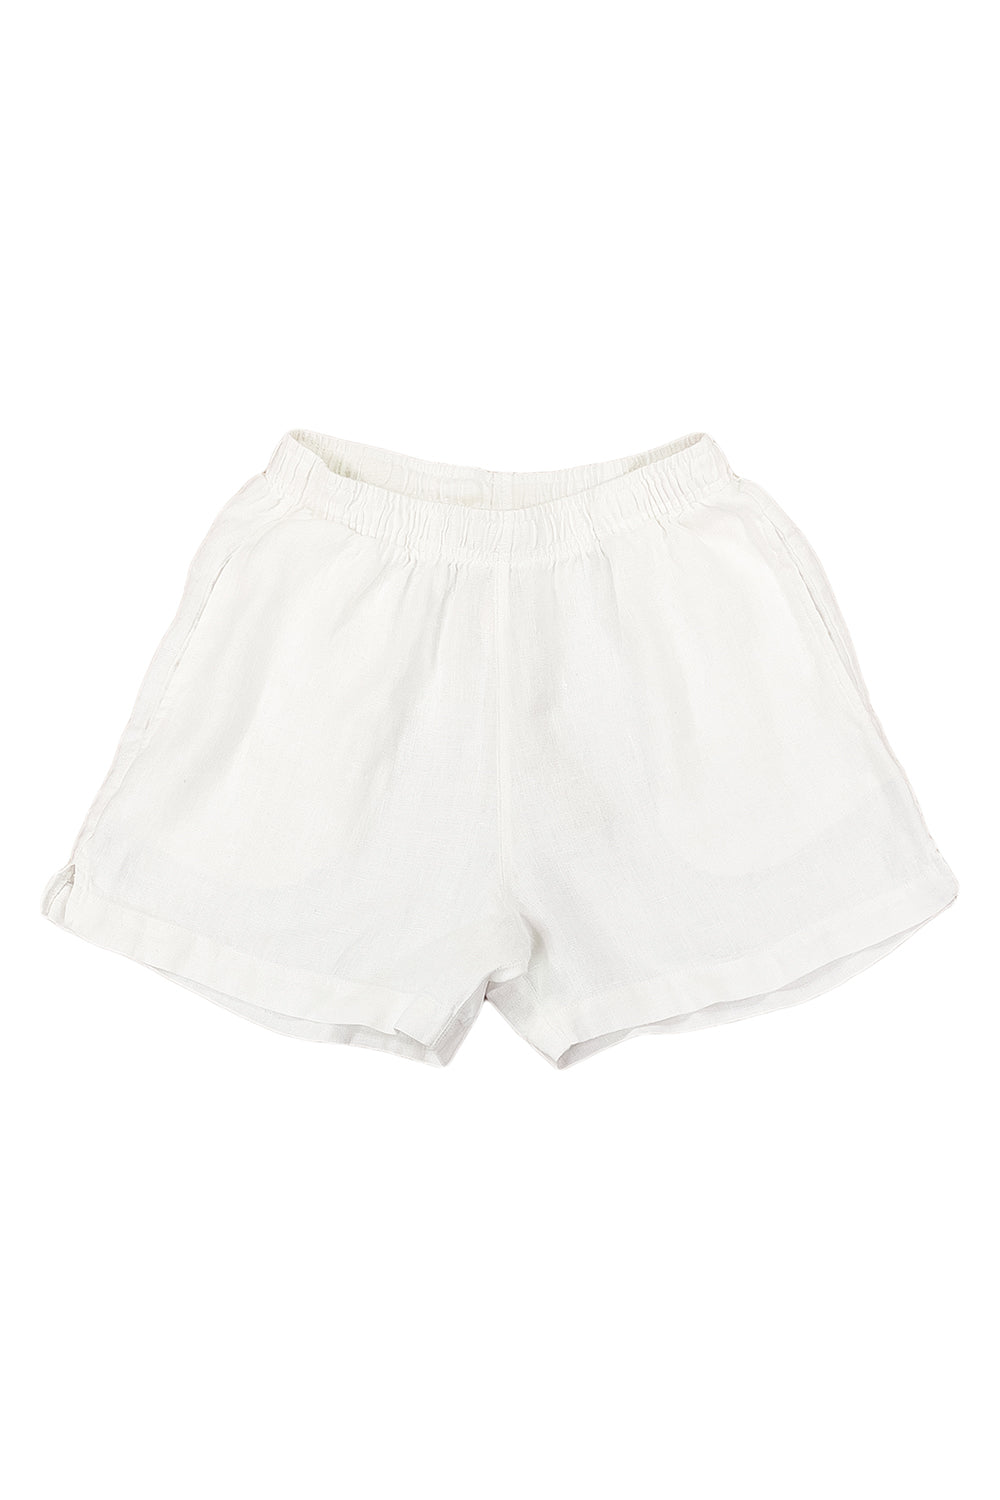 Makena 100% Hemp Short | Jungmaven Hemp Clothing & Accessories / Color: Washed White